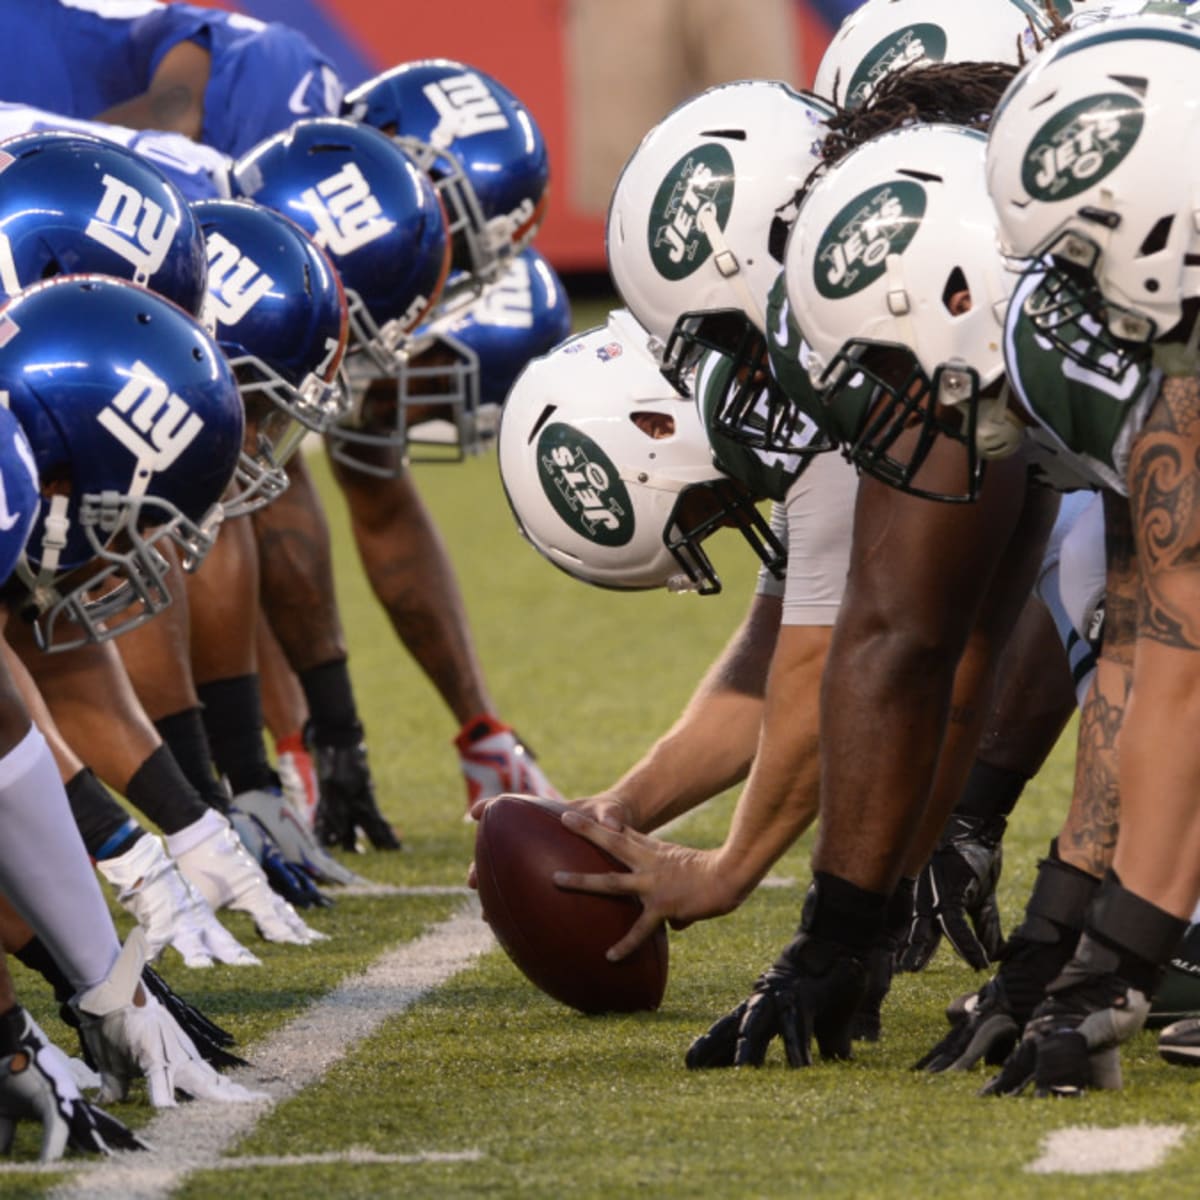 New York Jets vs. New York Giants - Sports Illustrated